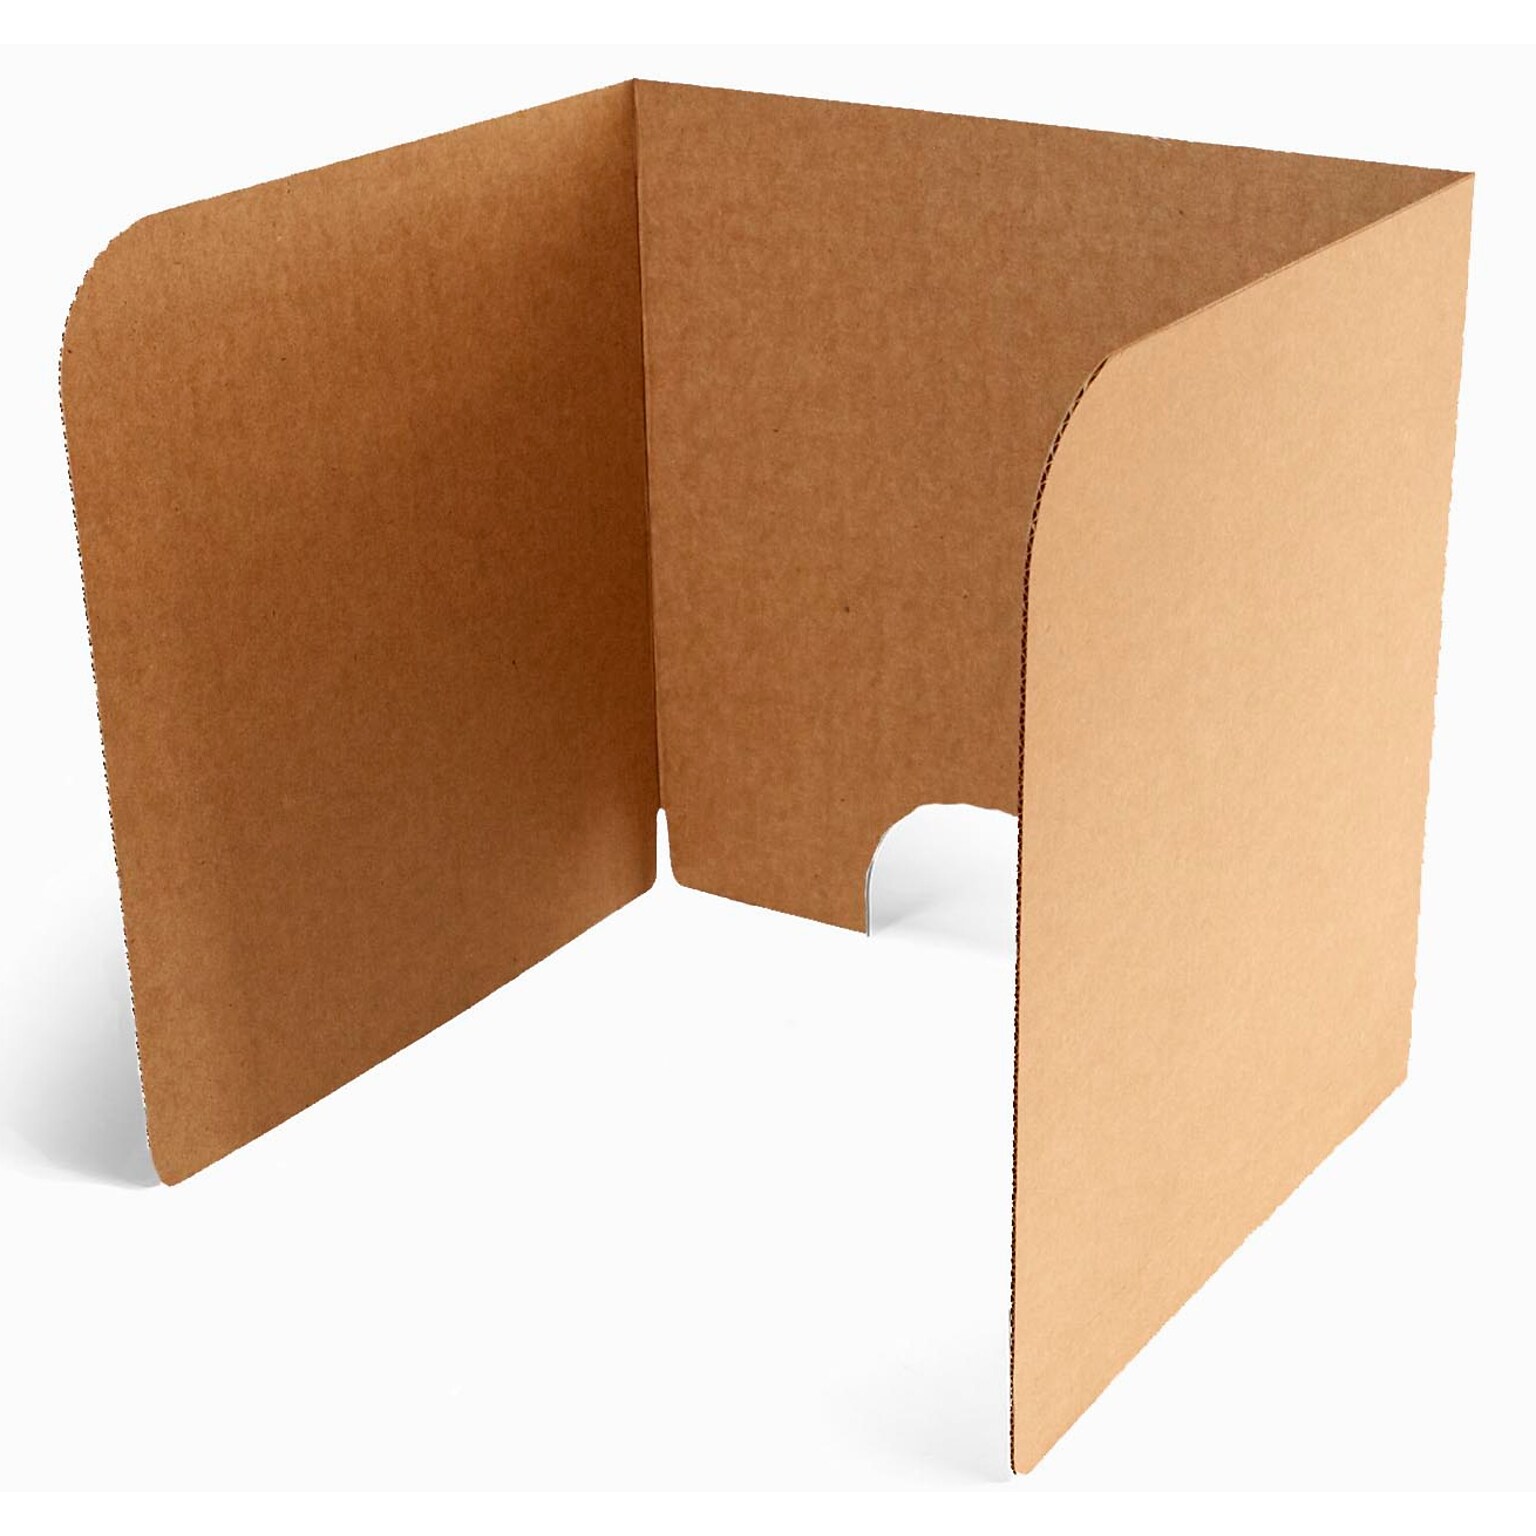 Classroom Products Foldable Cardboard Freestanding Privacy Shield, 20H x 20W, Kraft, 20/Box (2020 KR)